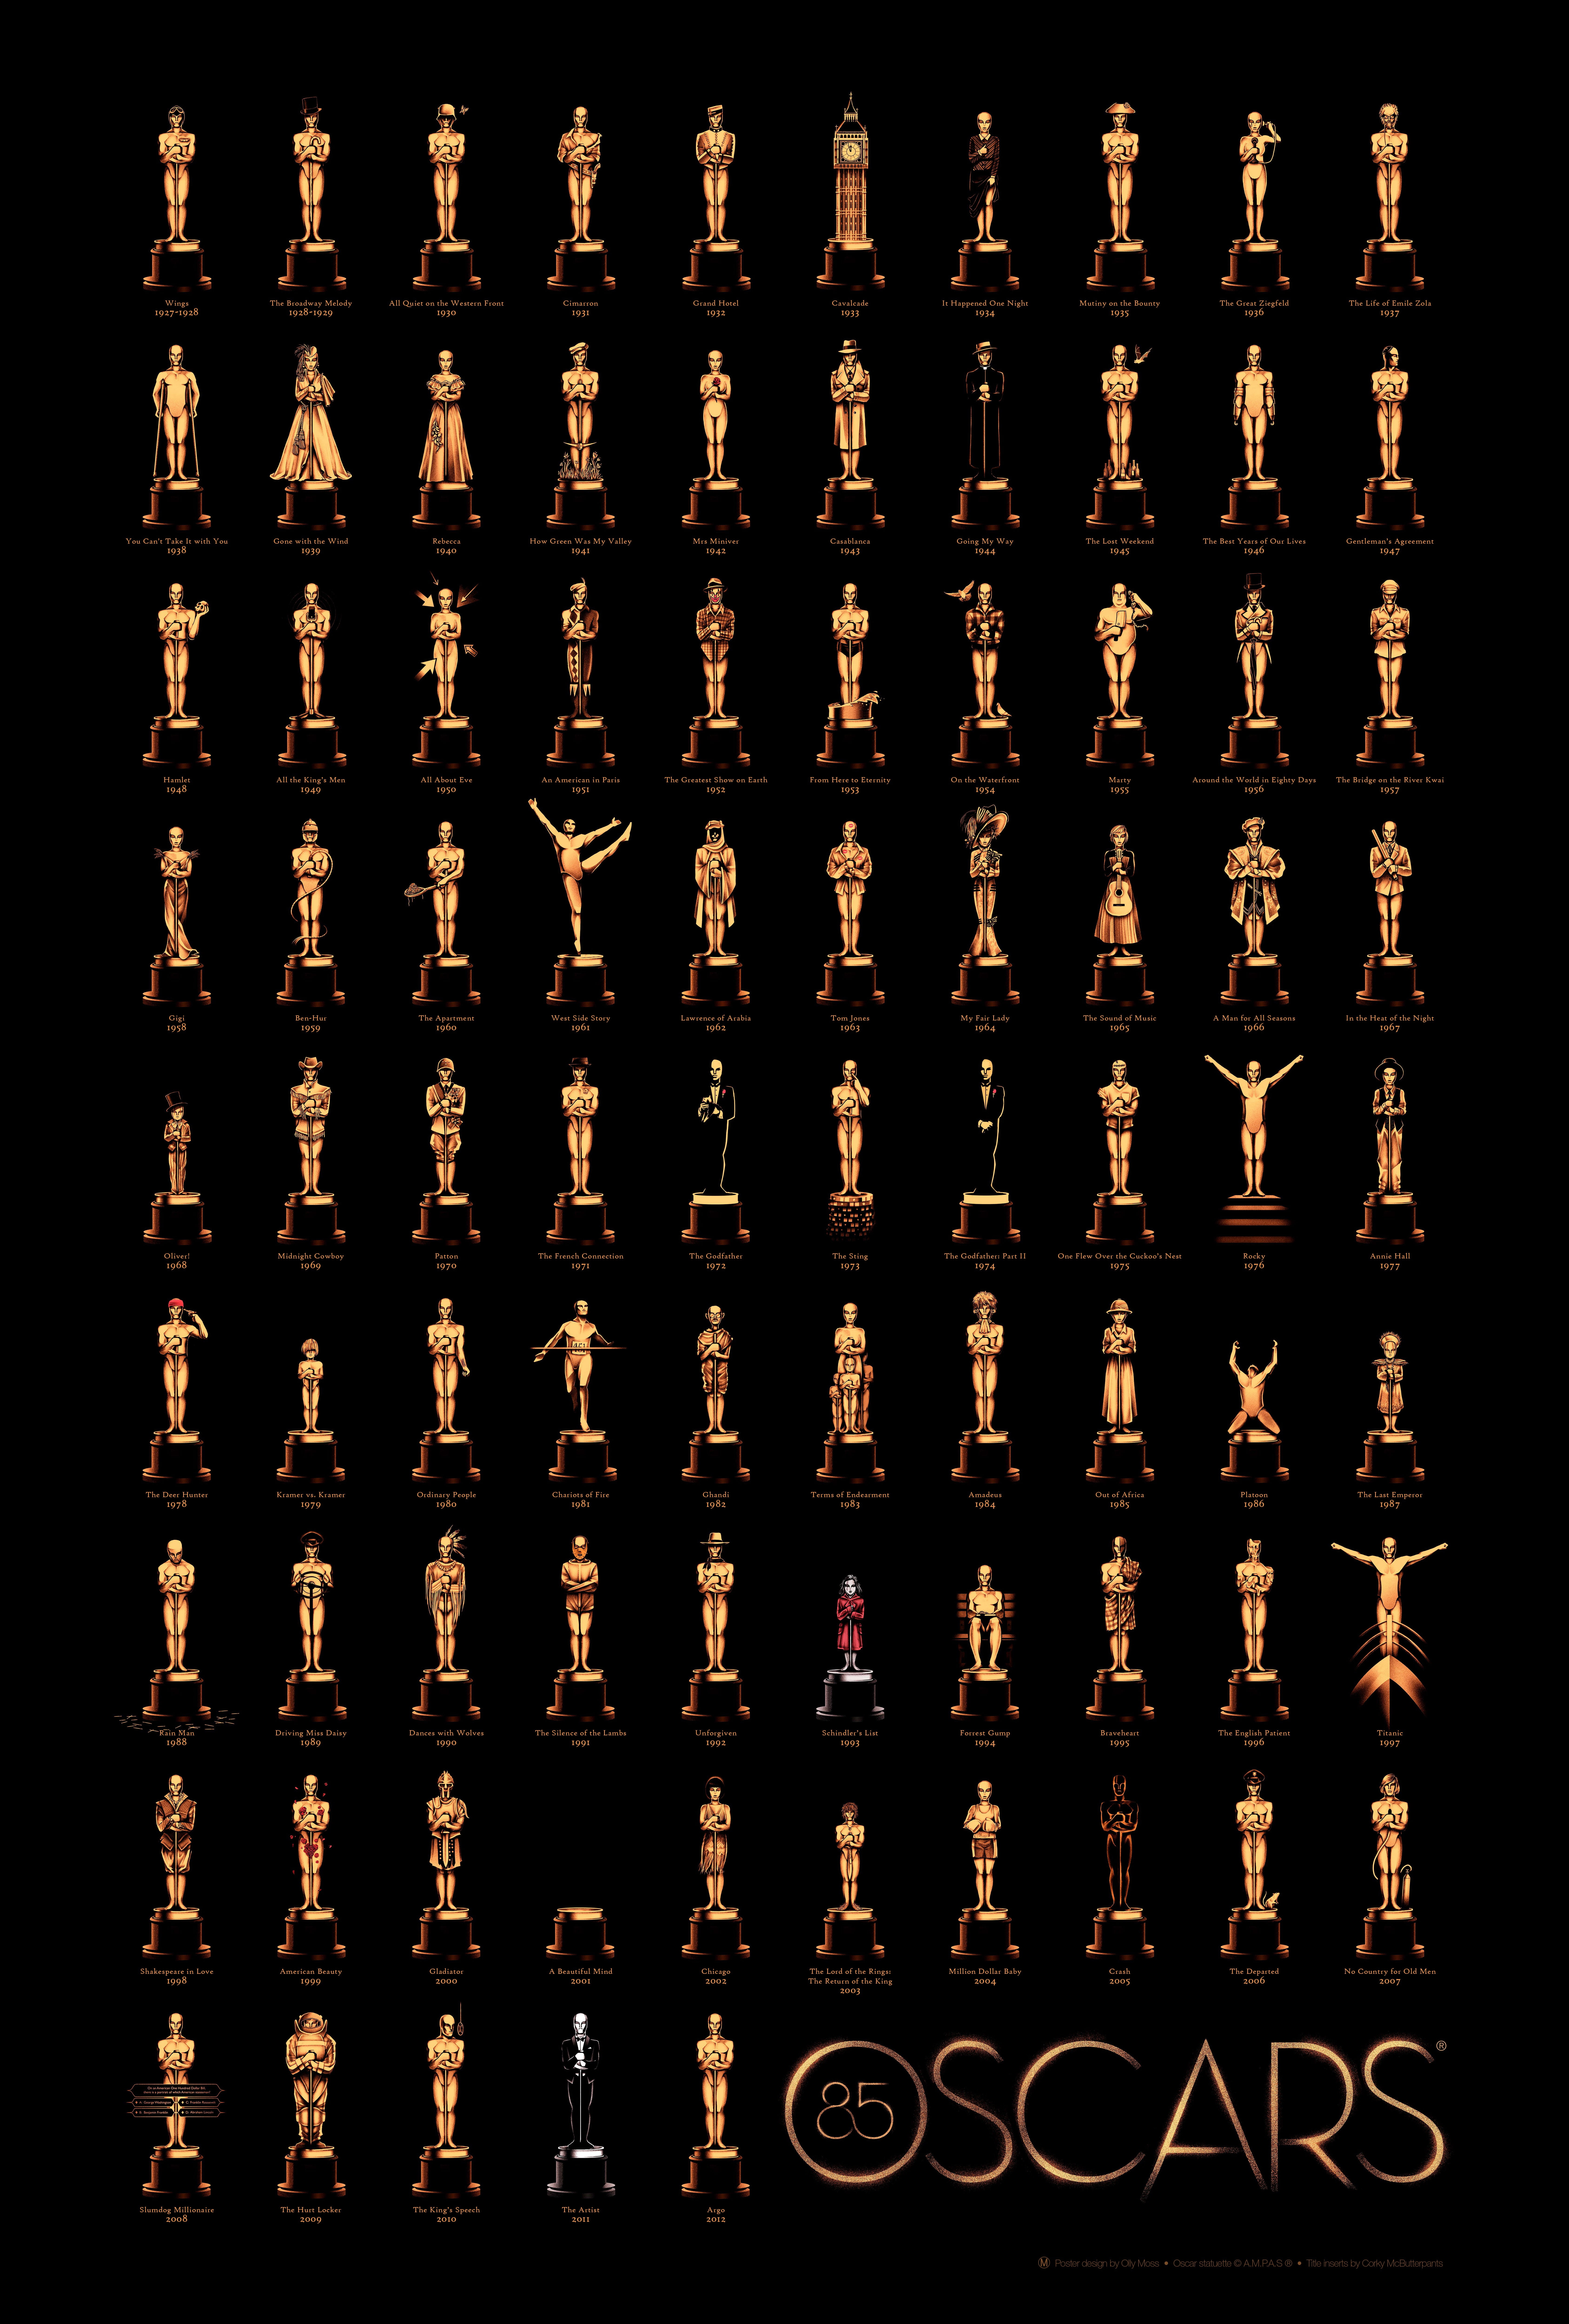 Oscars trophy poster, Oscars trophy lot, statue, movies, winner